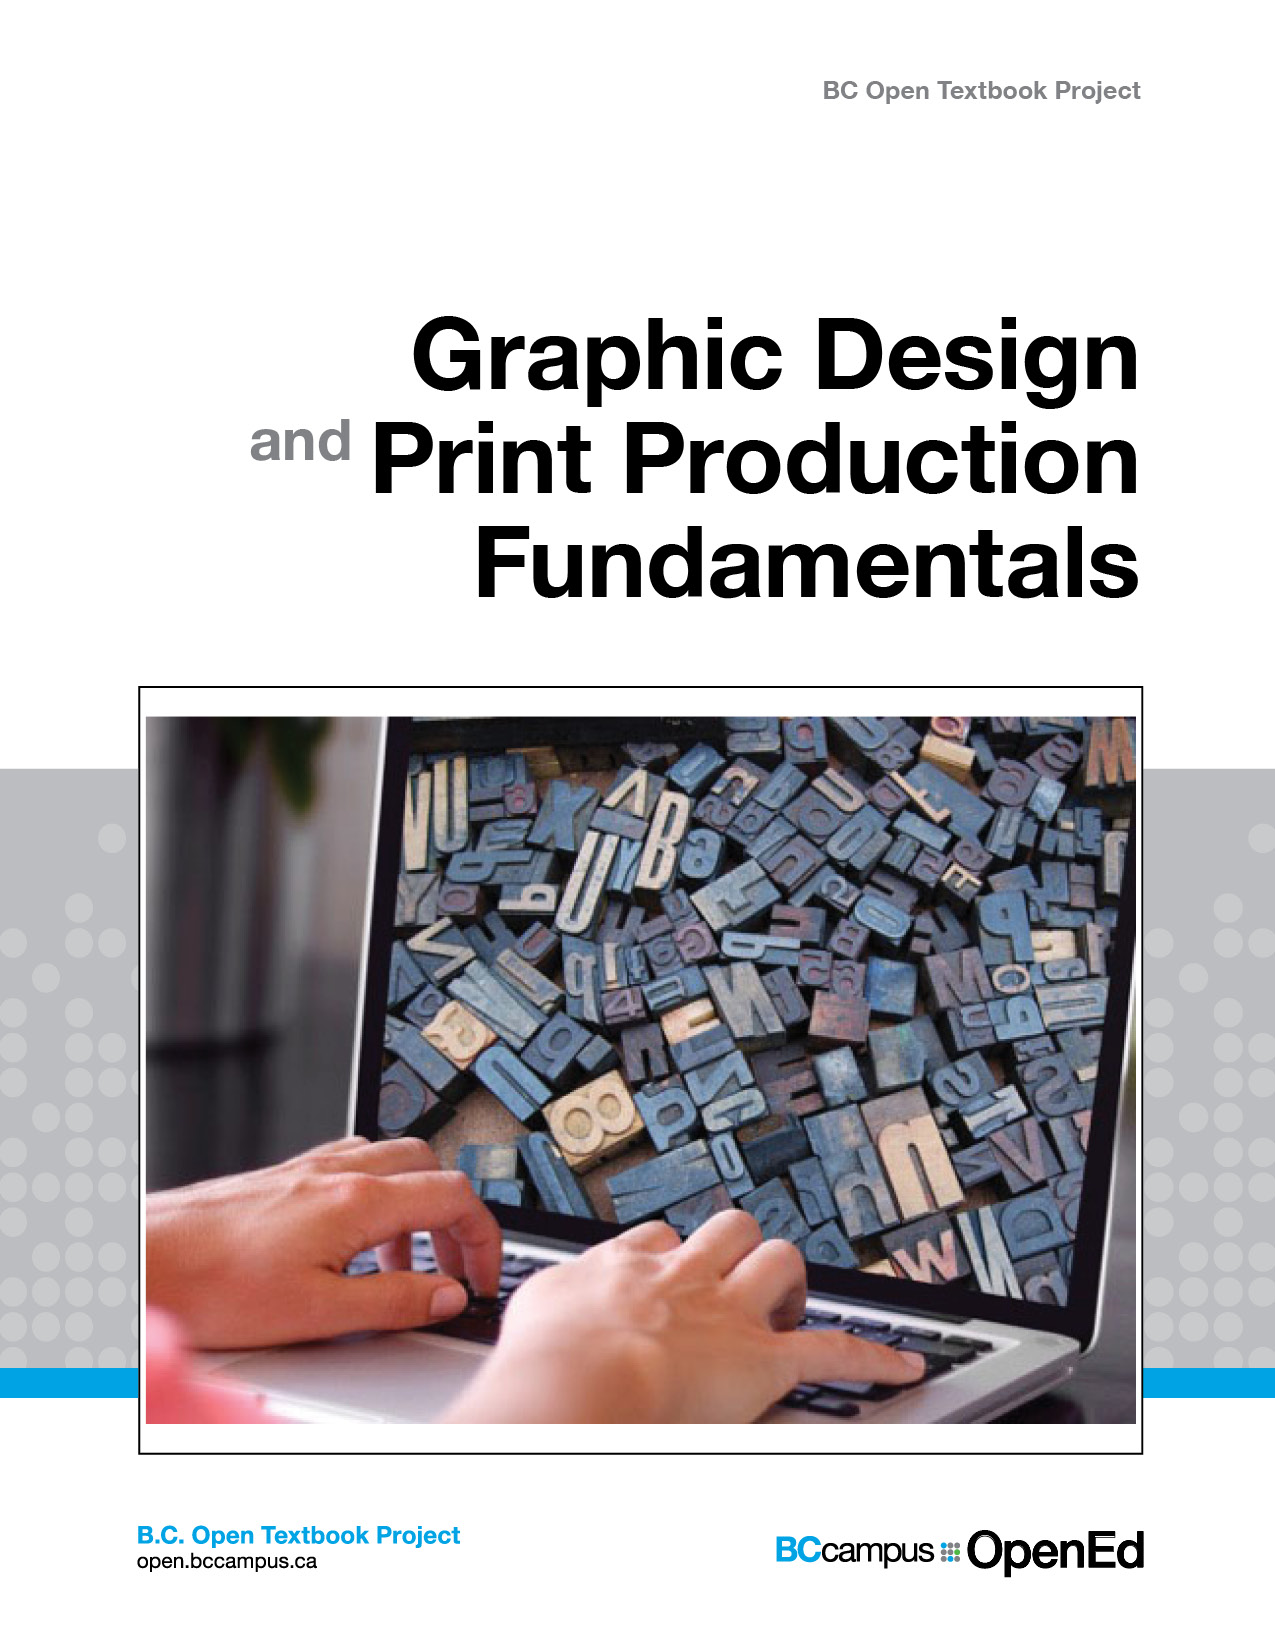 Habubu dukke indbildskhed Graphic Design and Print Production Fundamentals - Open Textbook Library